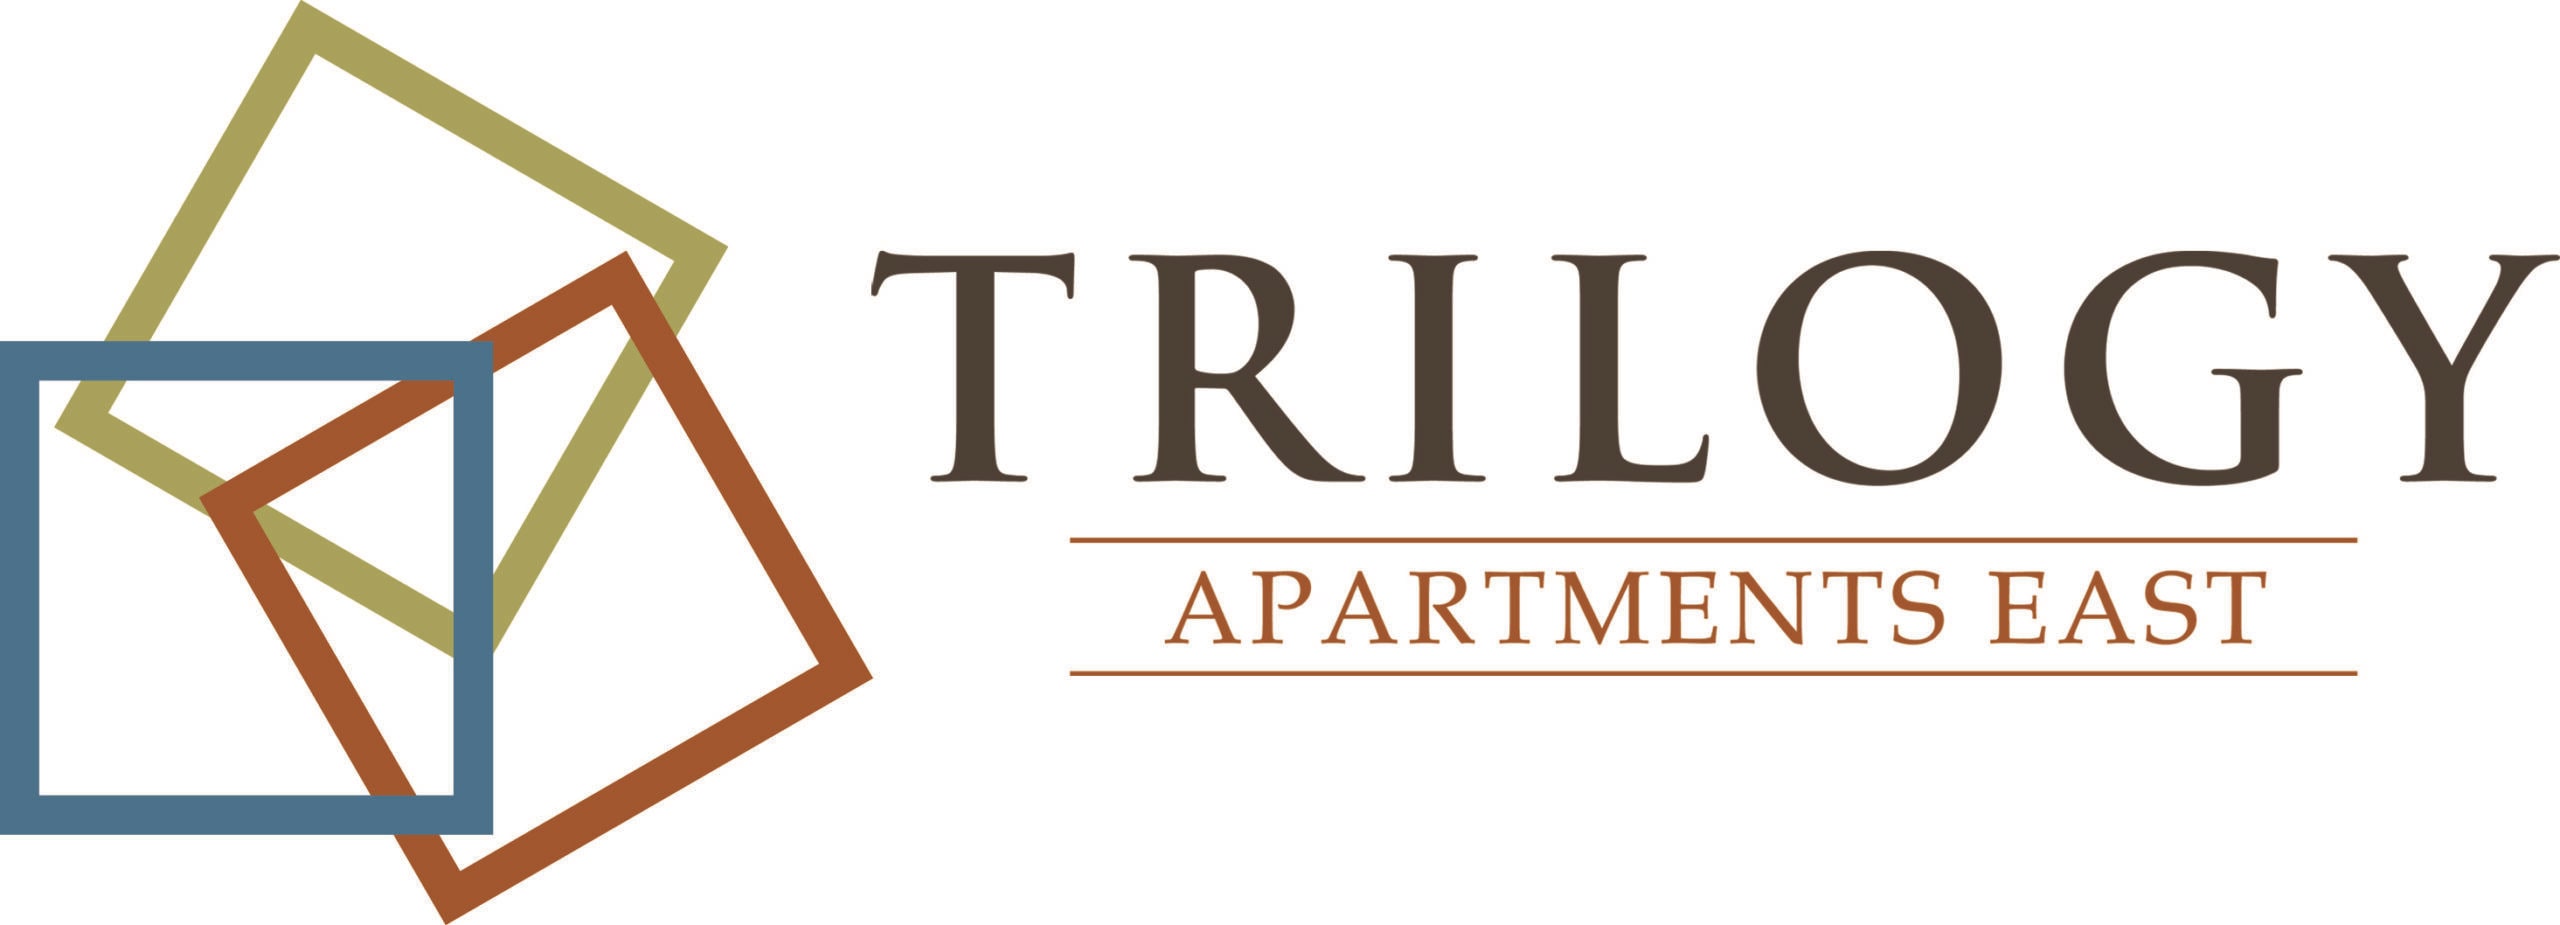 Trilogy East Apartments